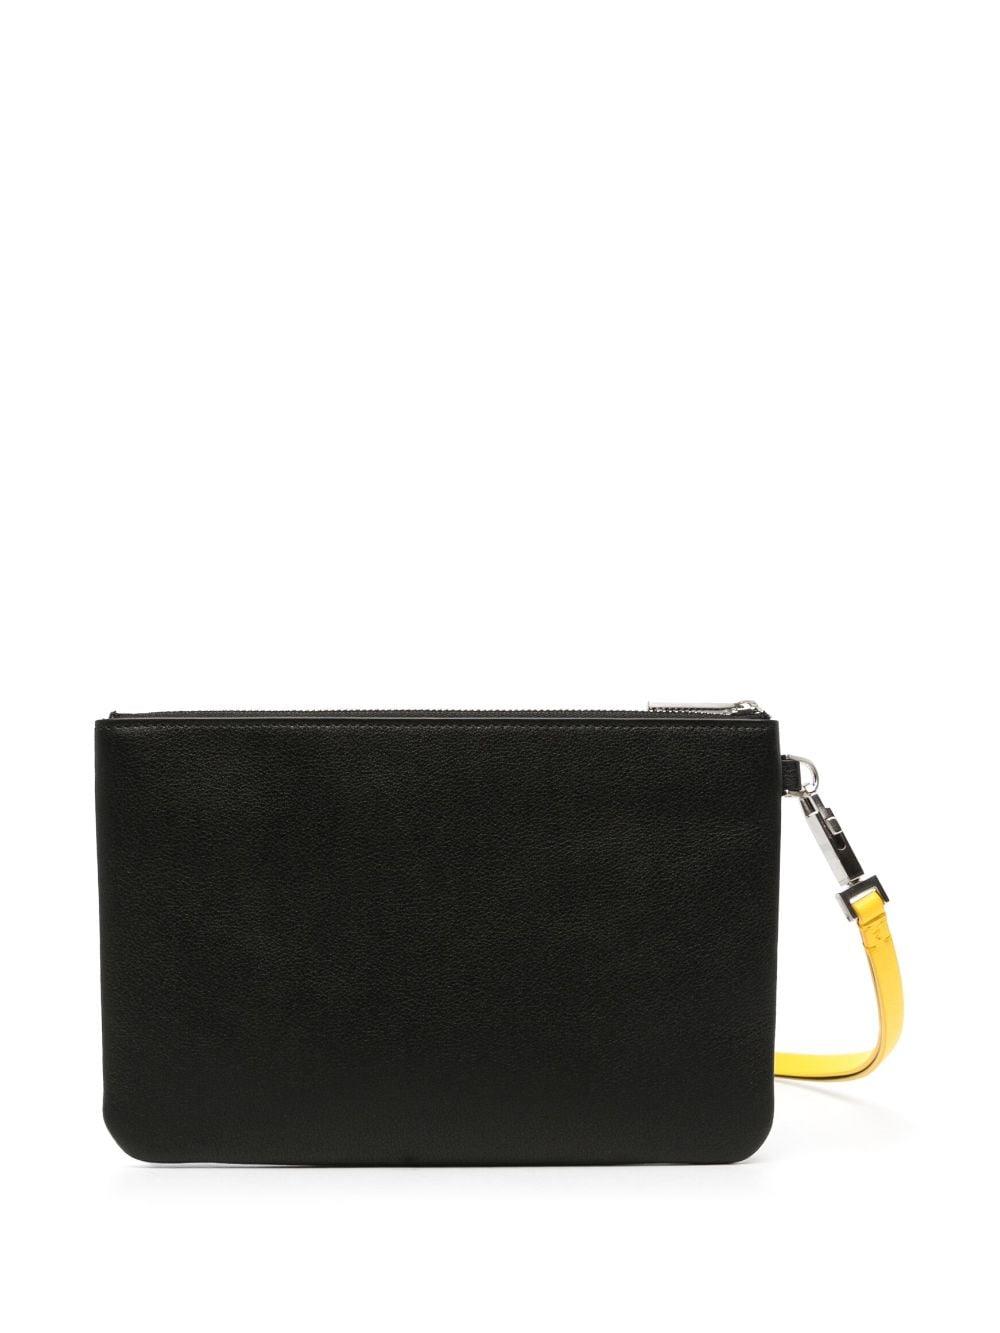 Ferragamo Double Wallet leather pouch - Black